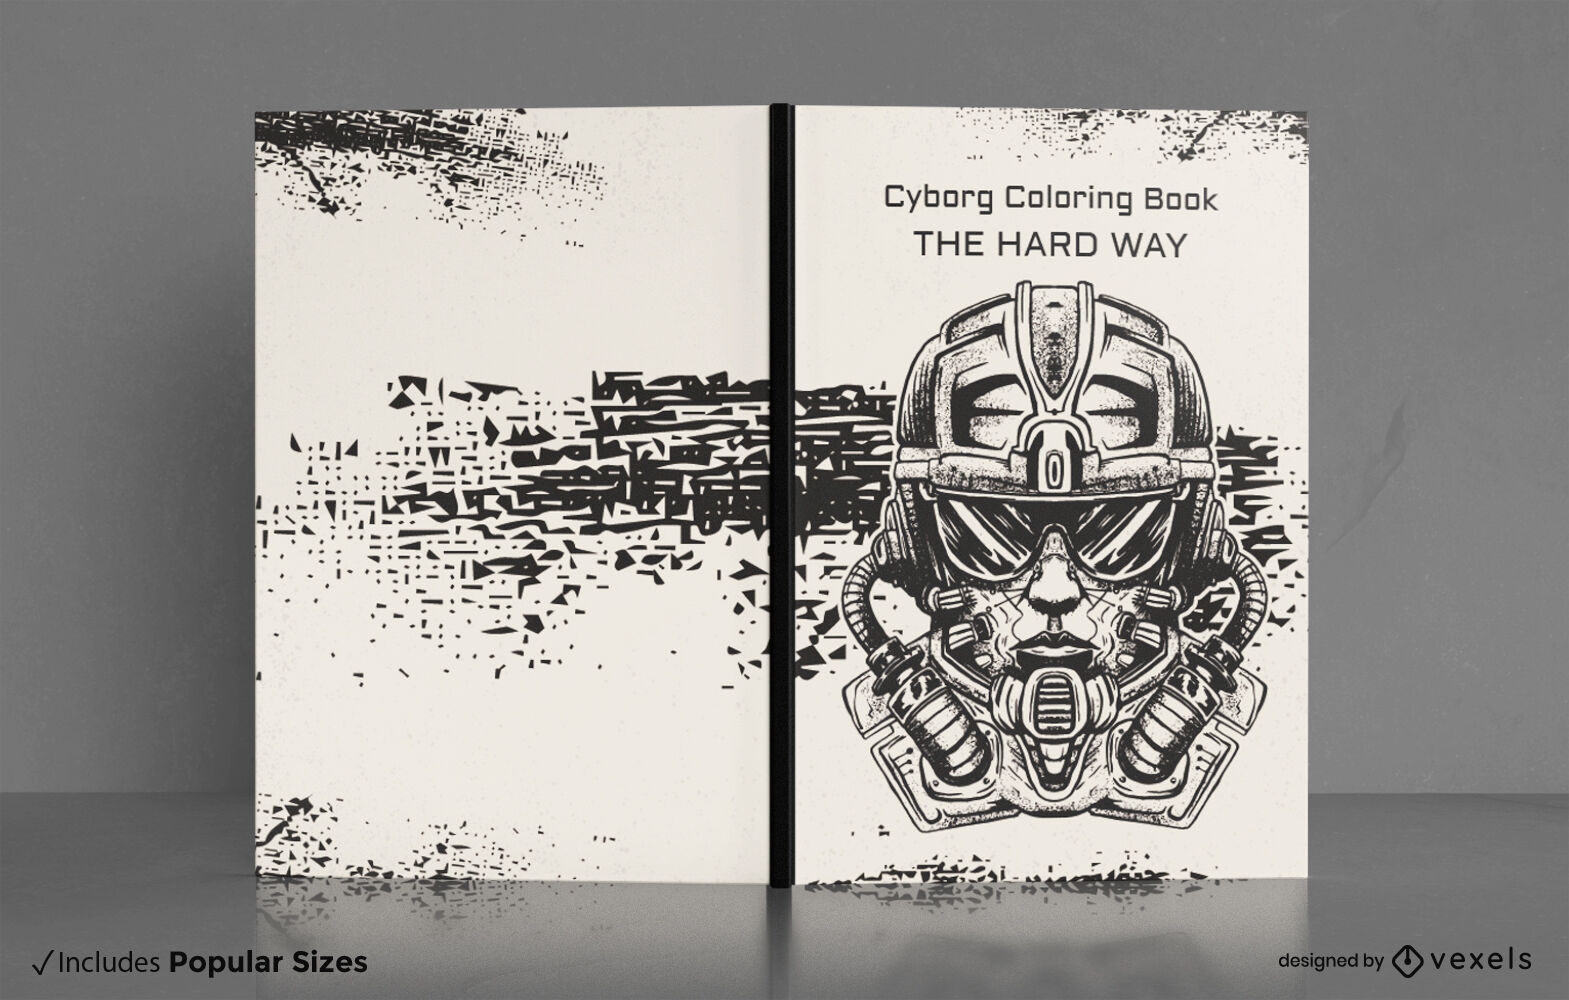 Cyborg coloring book cover design